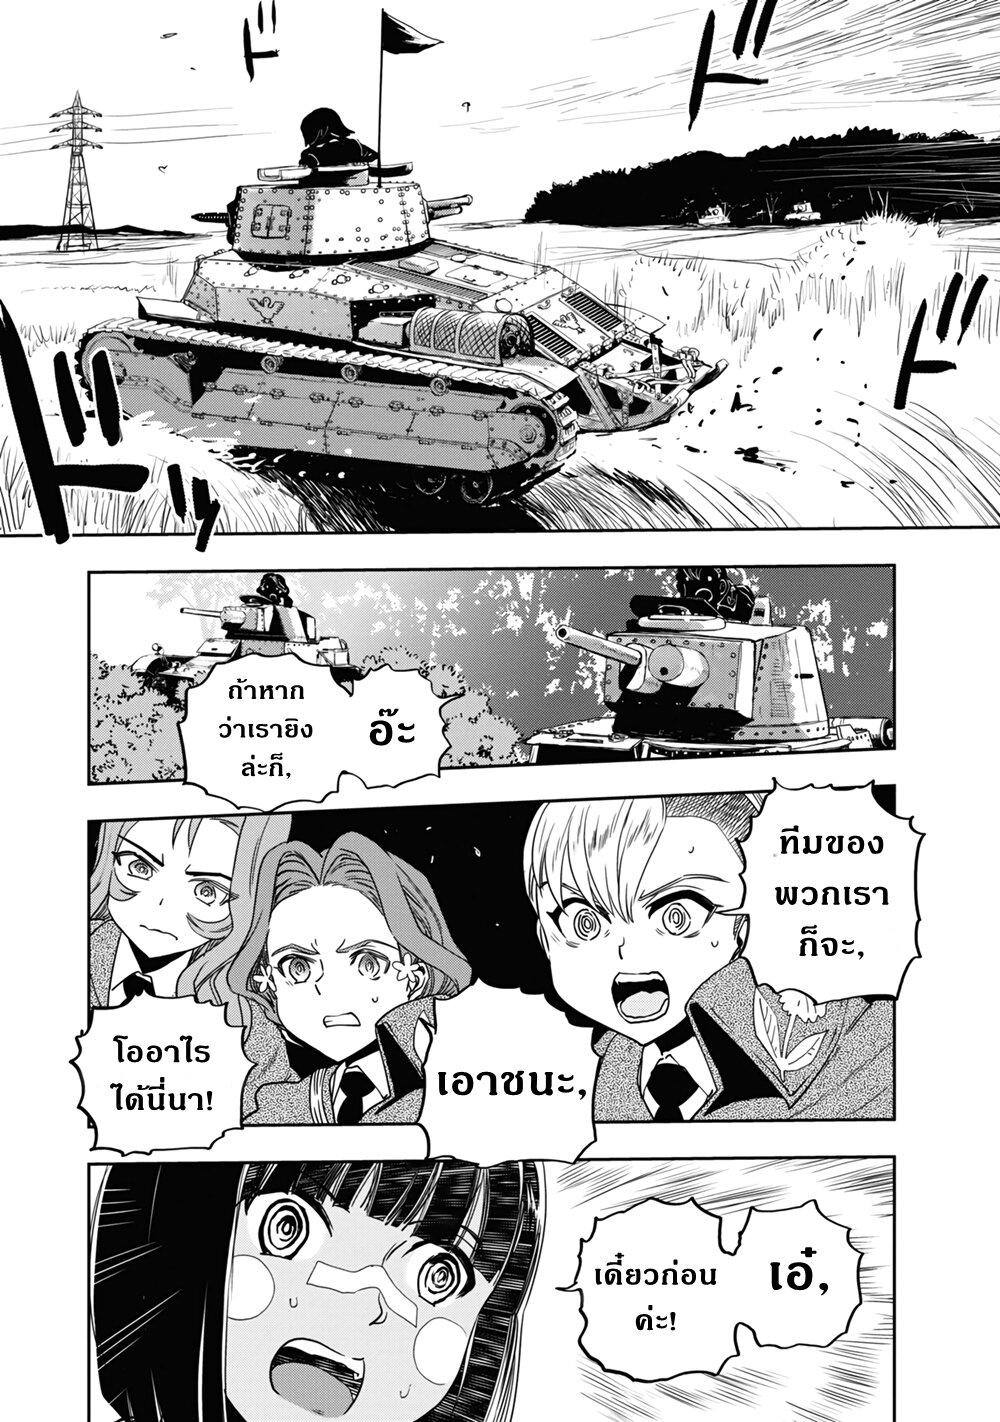 Girls und Panzer – Ribbon no Musha59 (34)